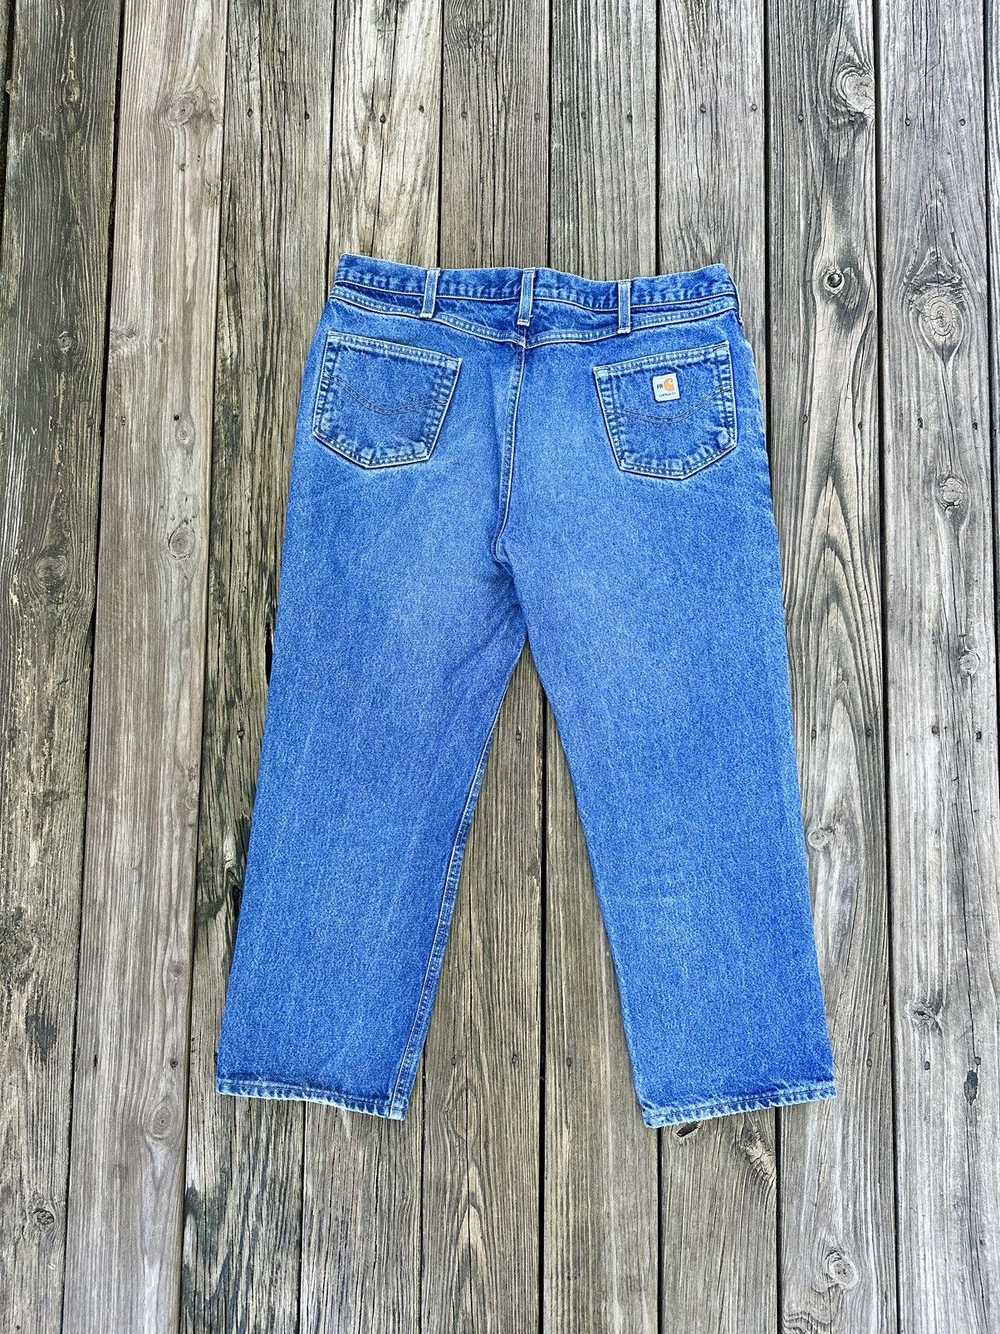 Carhartt Carhartt Fire Resistant Jeans - image 1